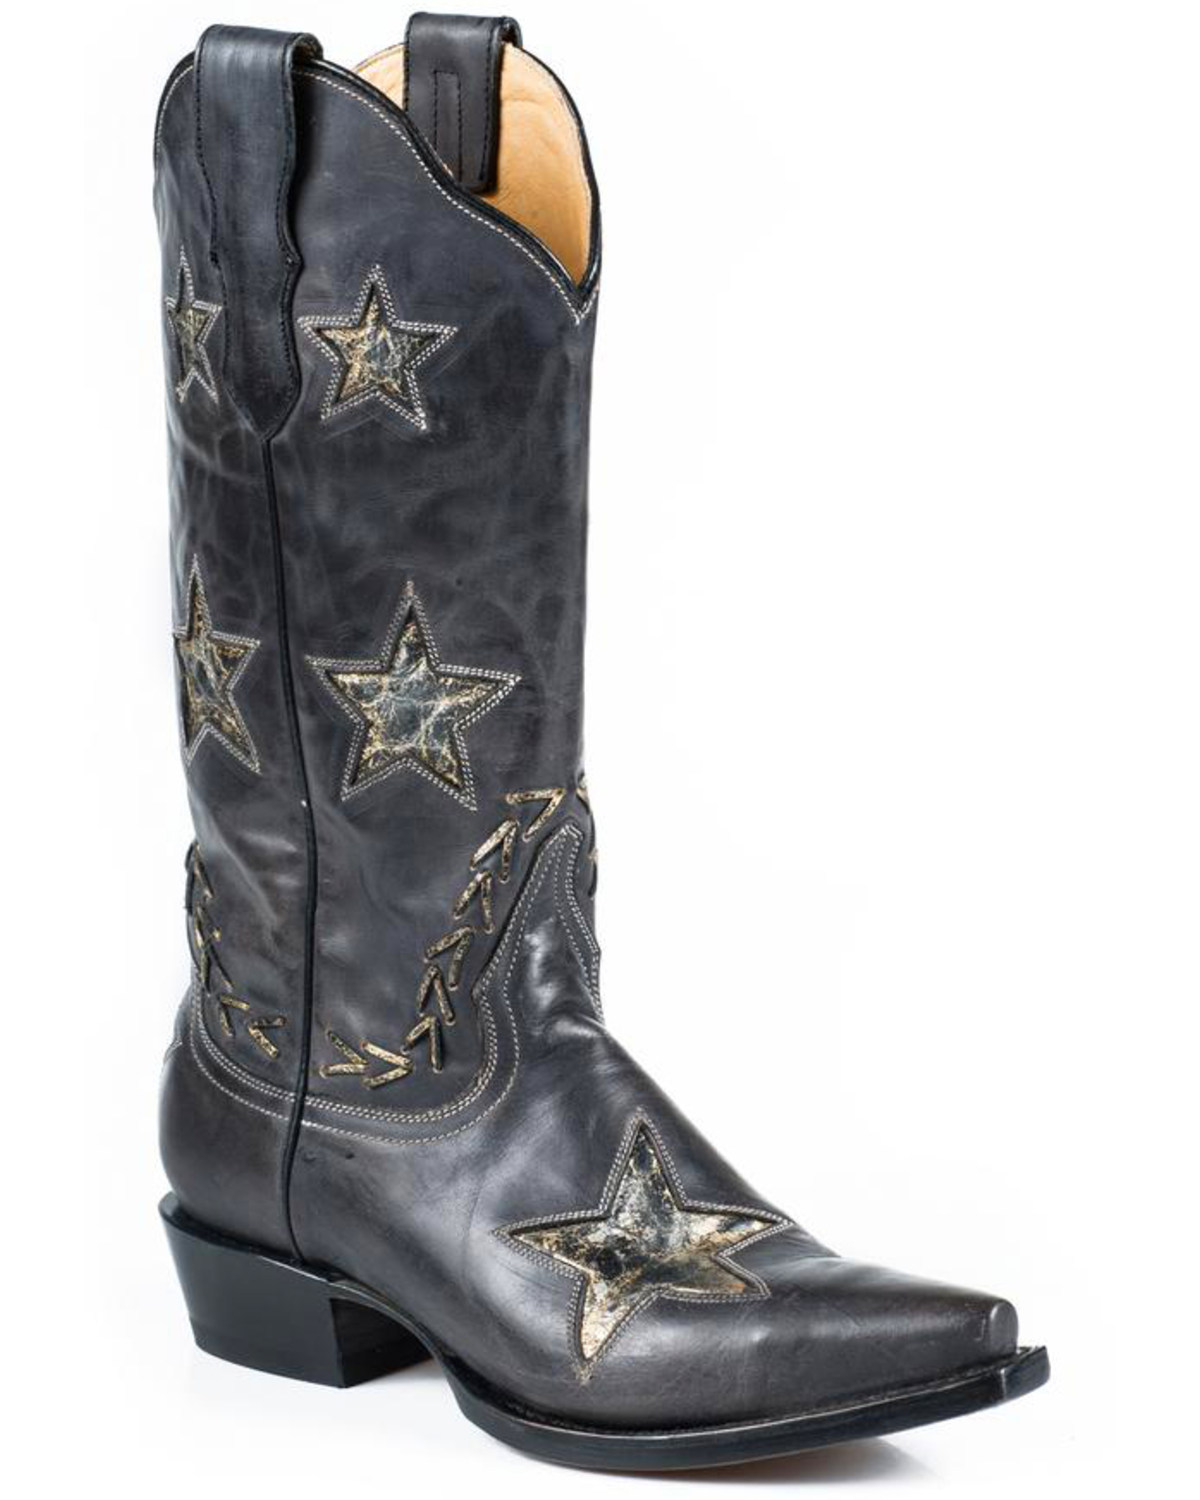 Stetson Women's Star Western Boots - Snip Toe